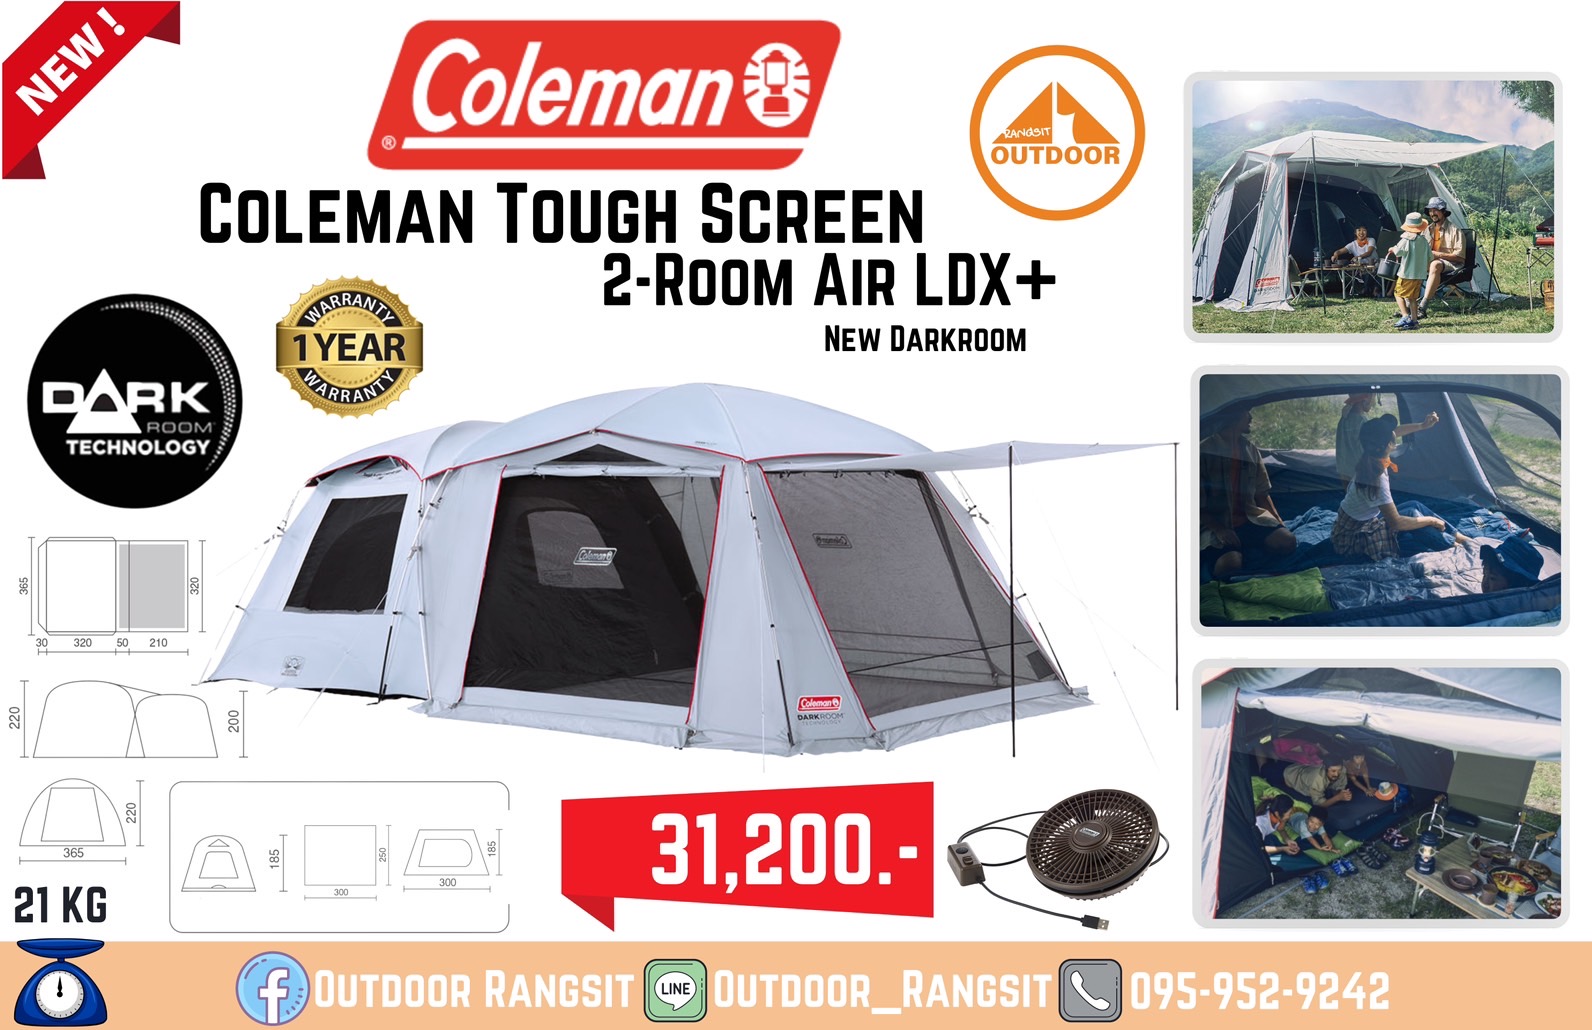 Coleman tough screen 2 room house /LDX+ AIR | Lazada.co.th